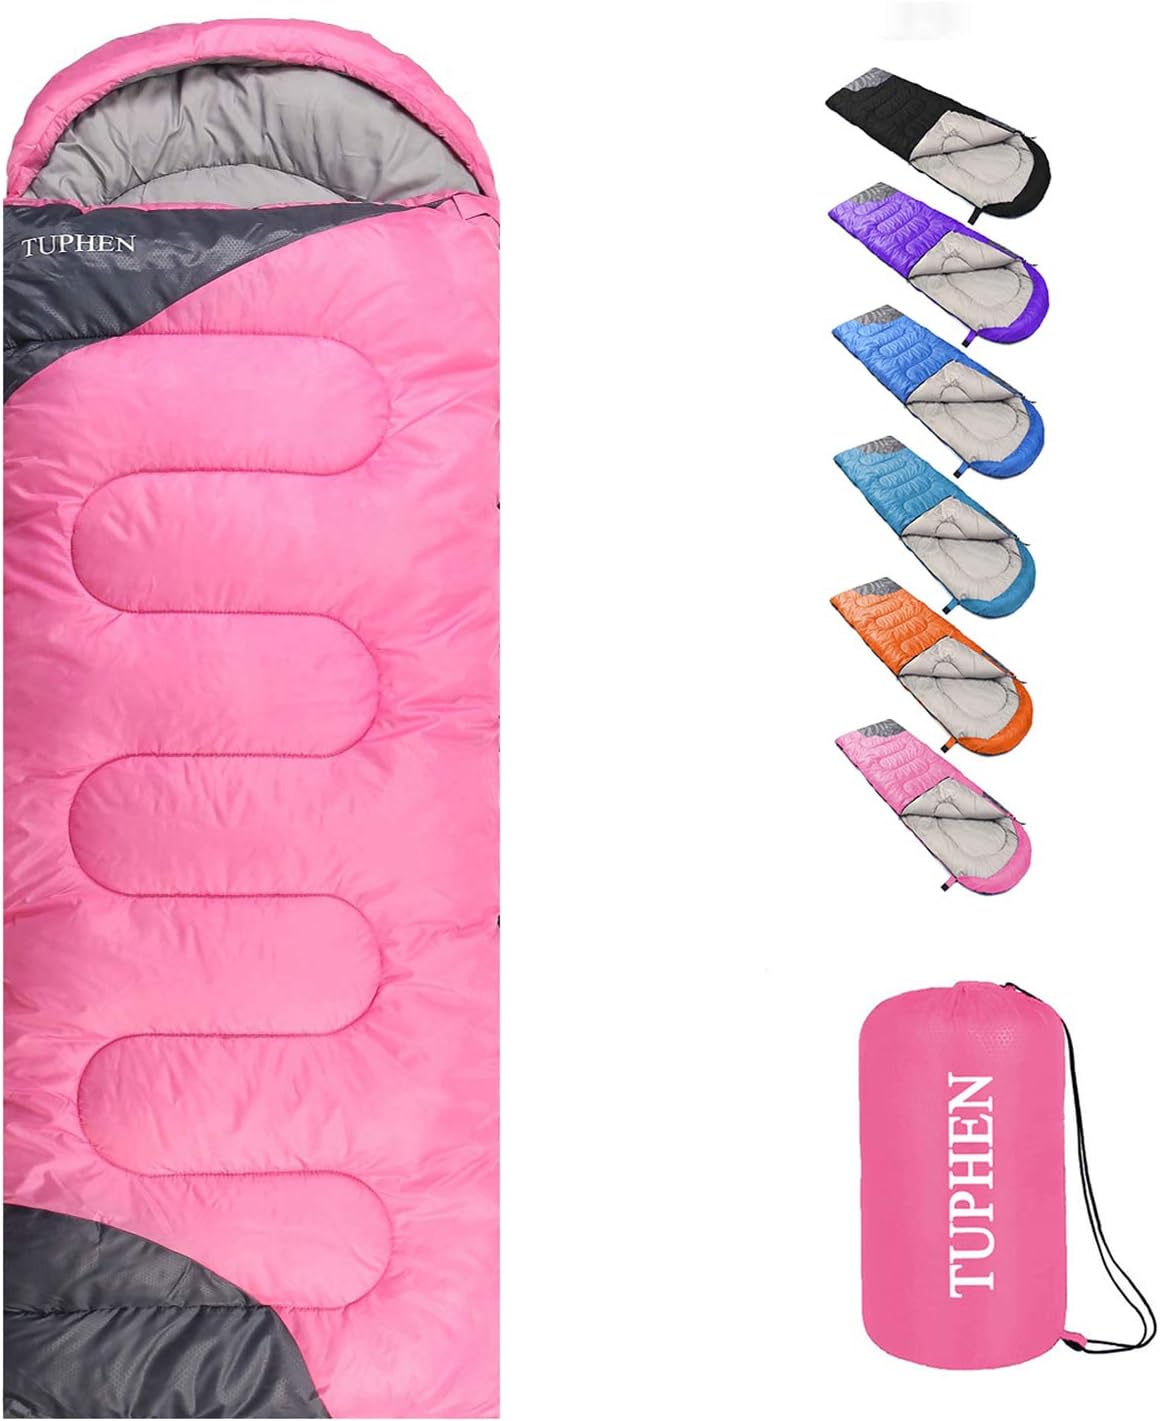 TUPHEN- Sleeping Bags for Adults, Kids, Boys Girls